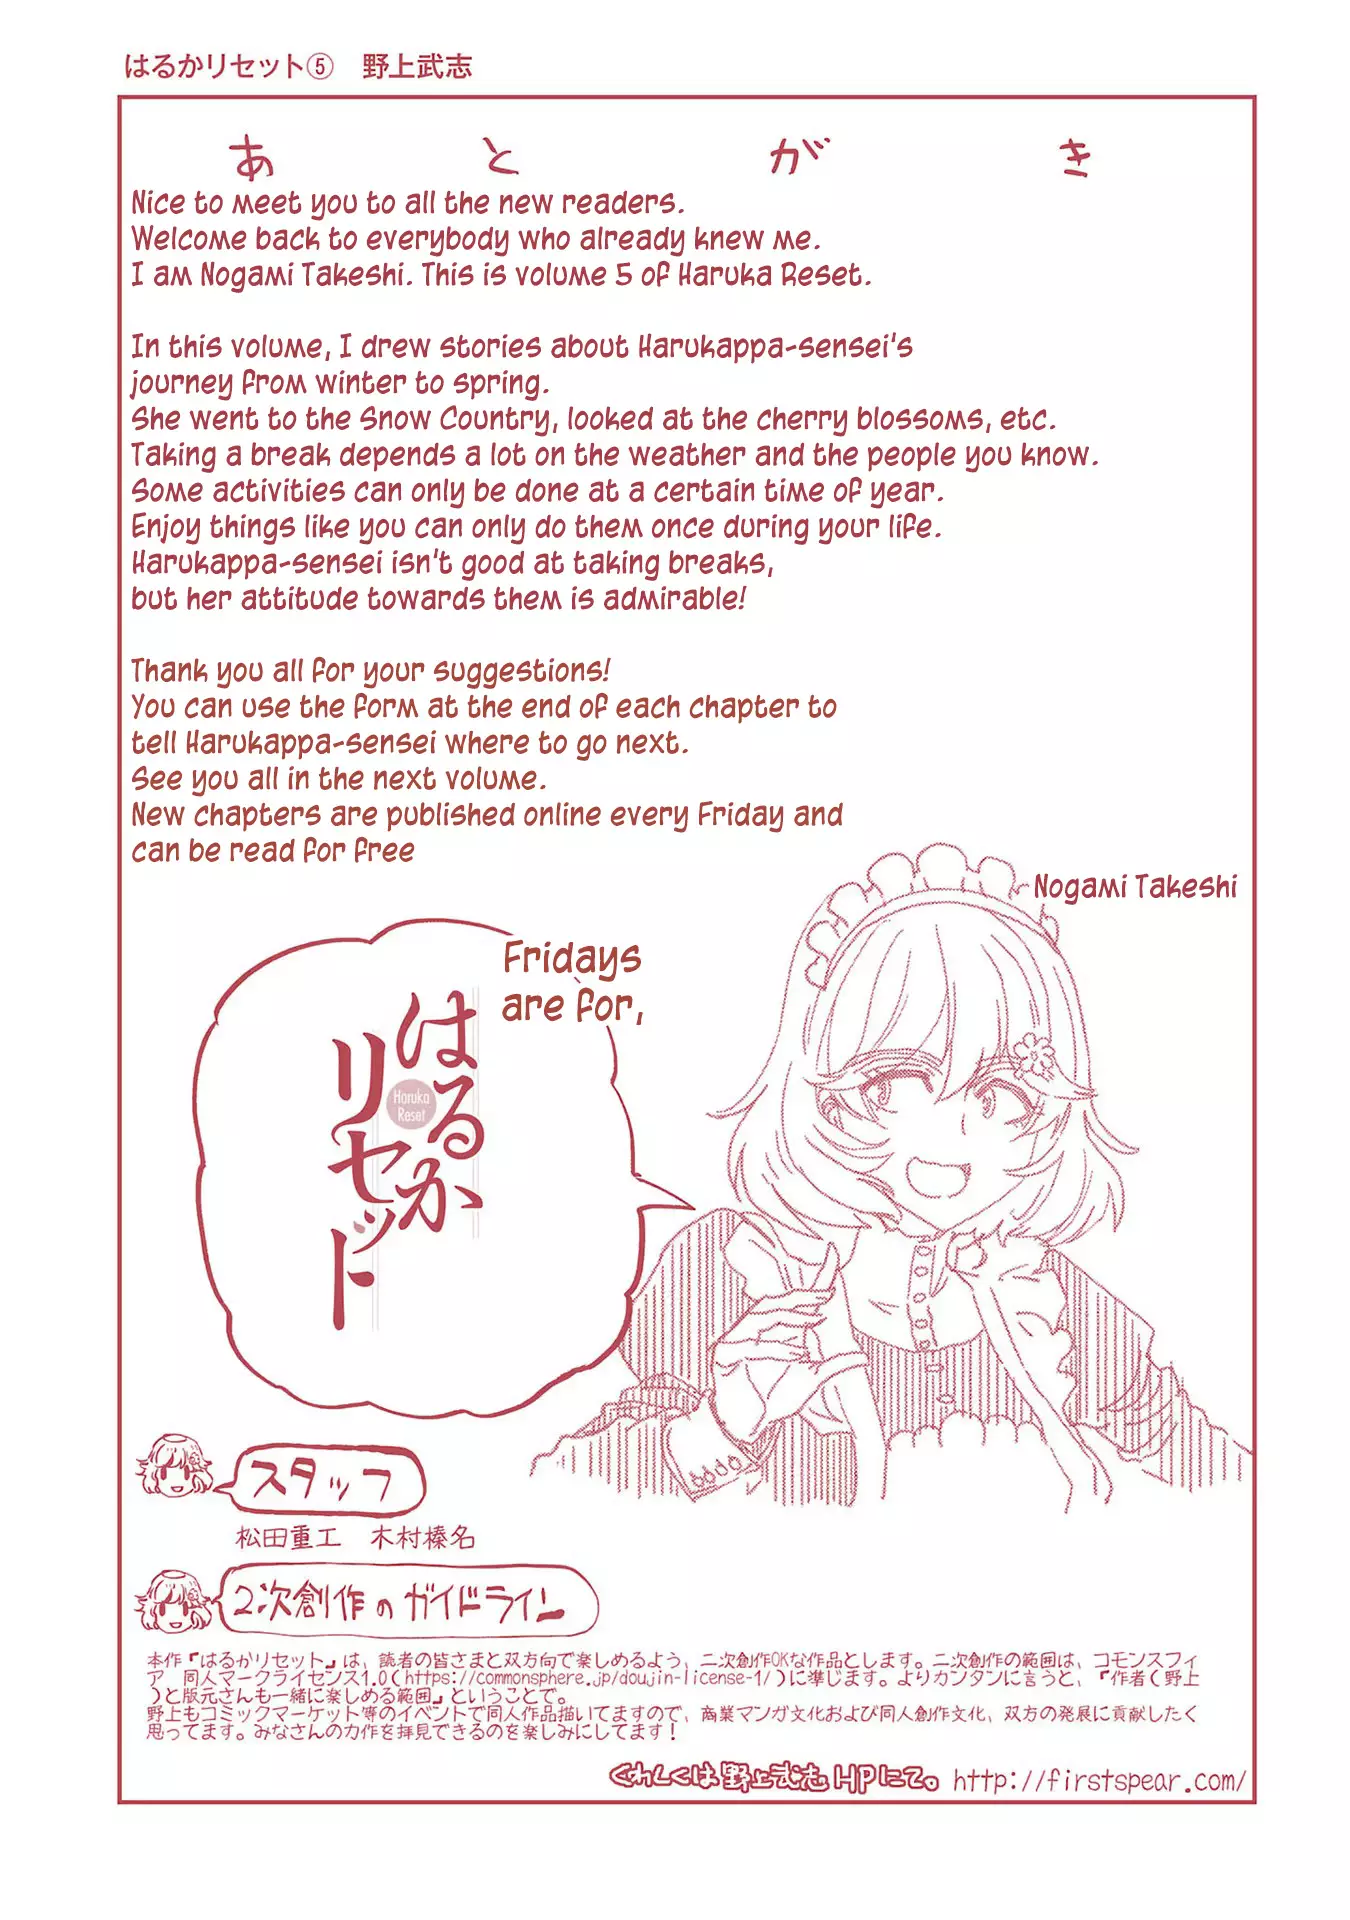 Haruka Reset - 40 page 22-507f1d69